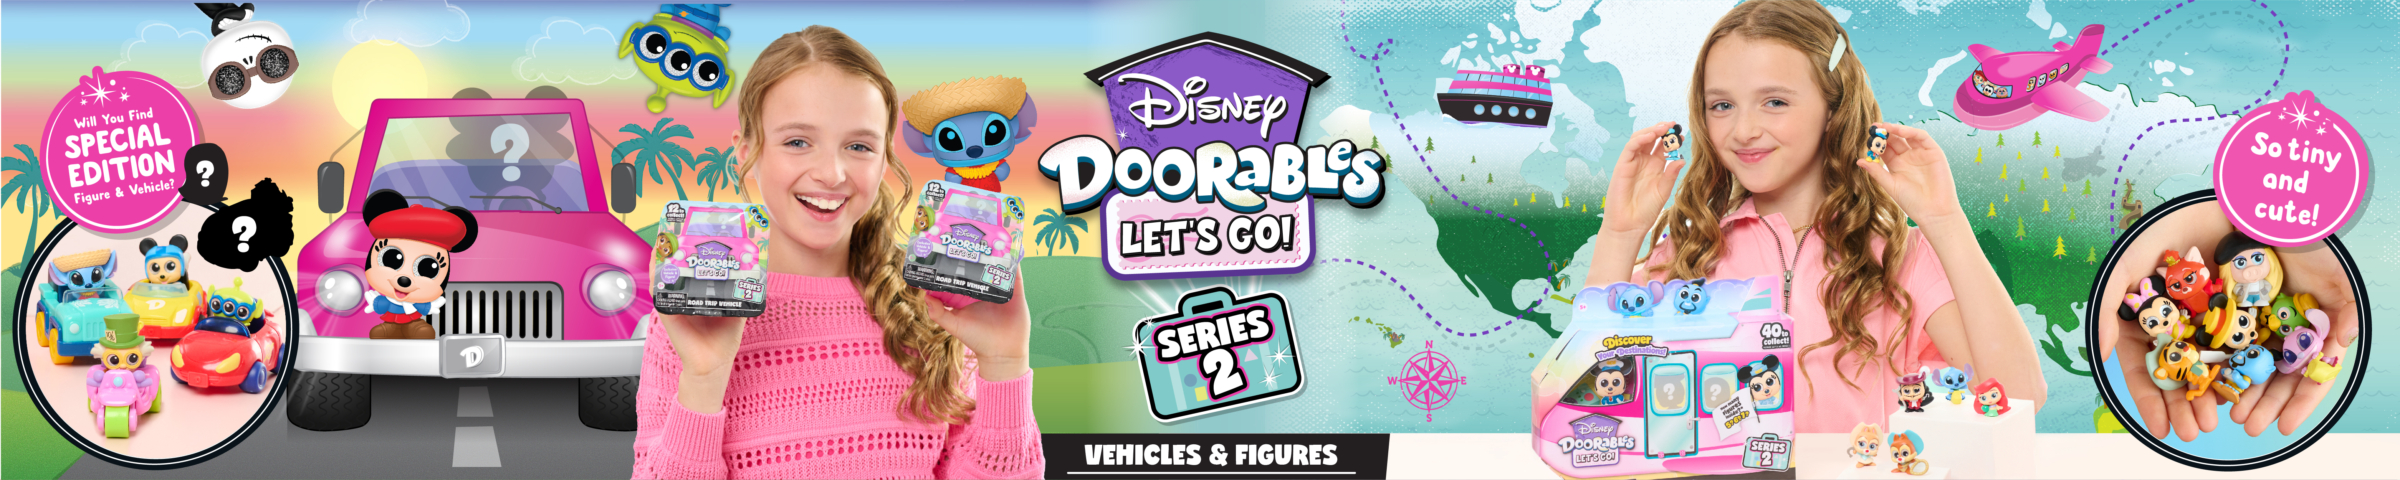 Disney Doorables Season 2, Lets Go - Slide 2